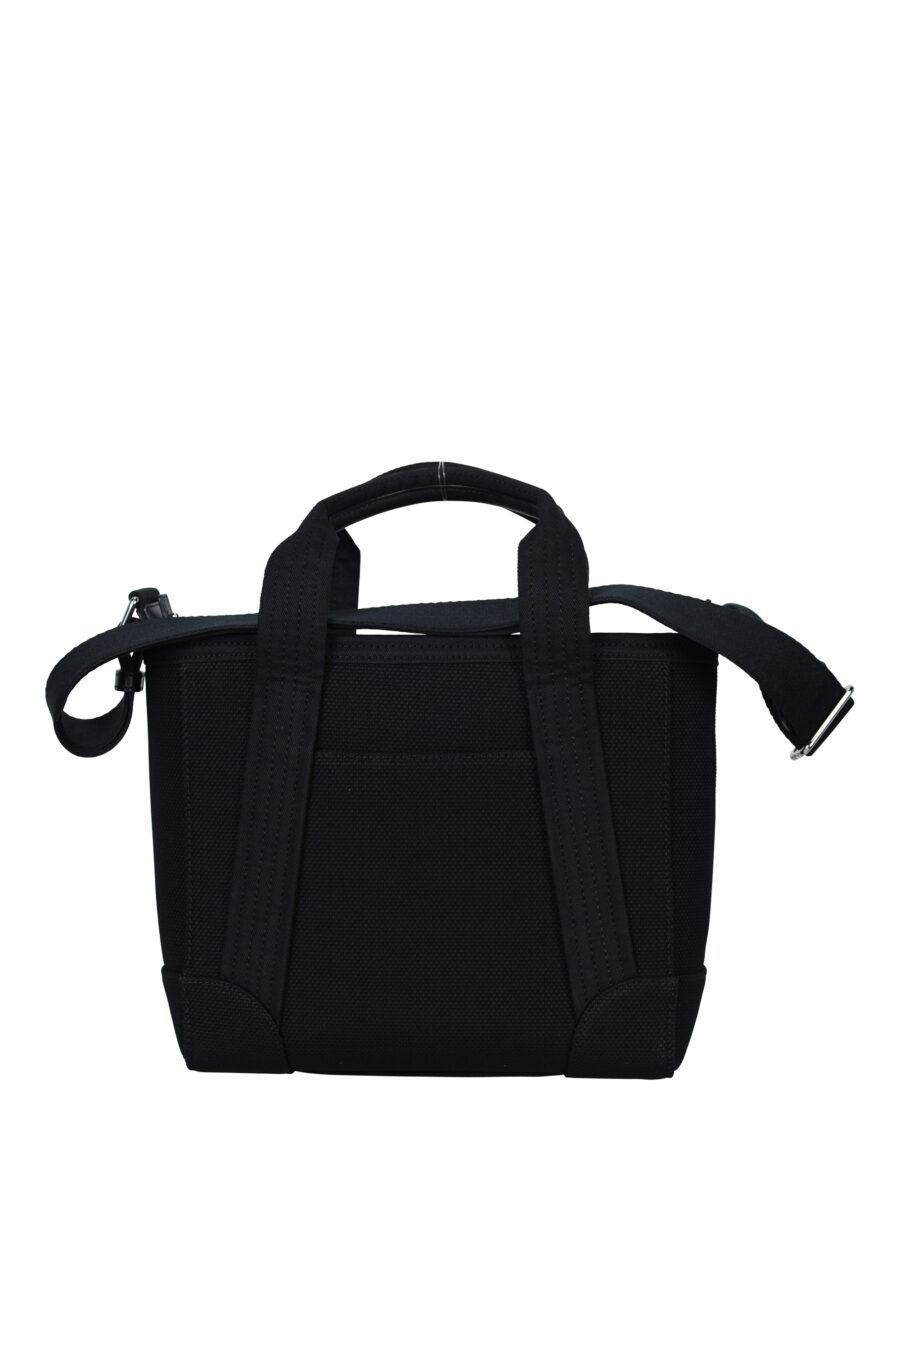 Tote bag mini with mini logo "kenzo paris" - 3612230546851 2